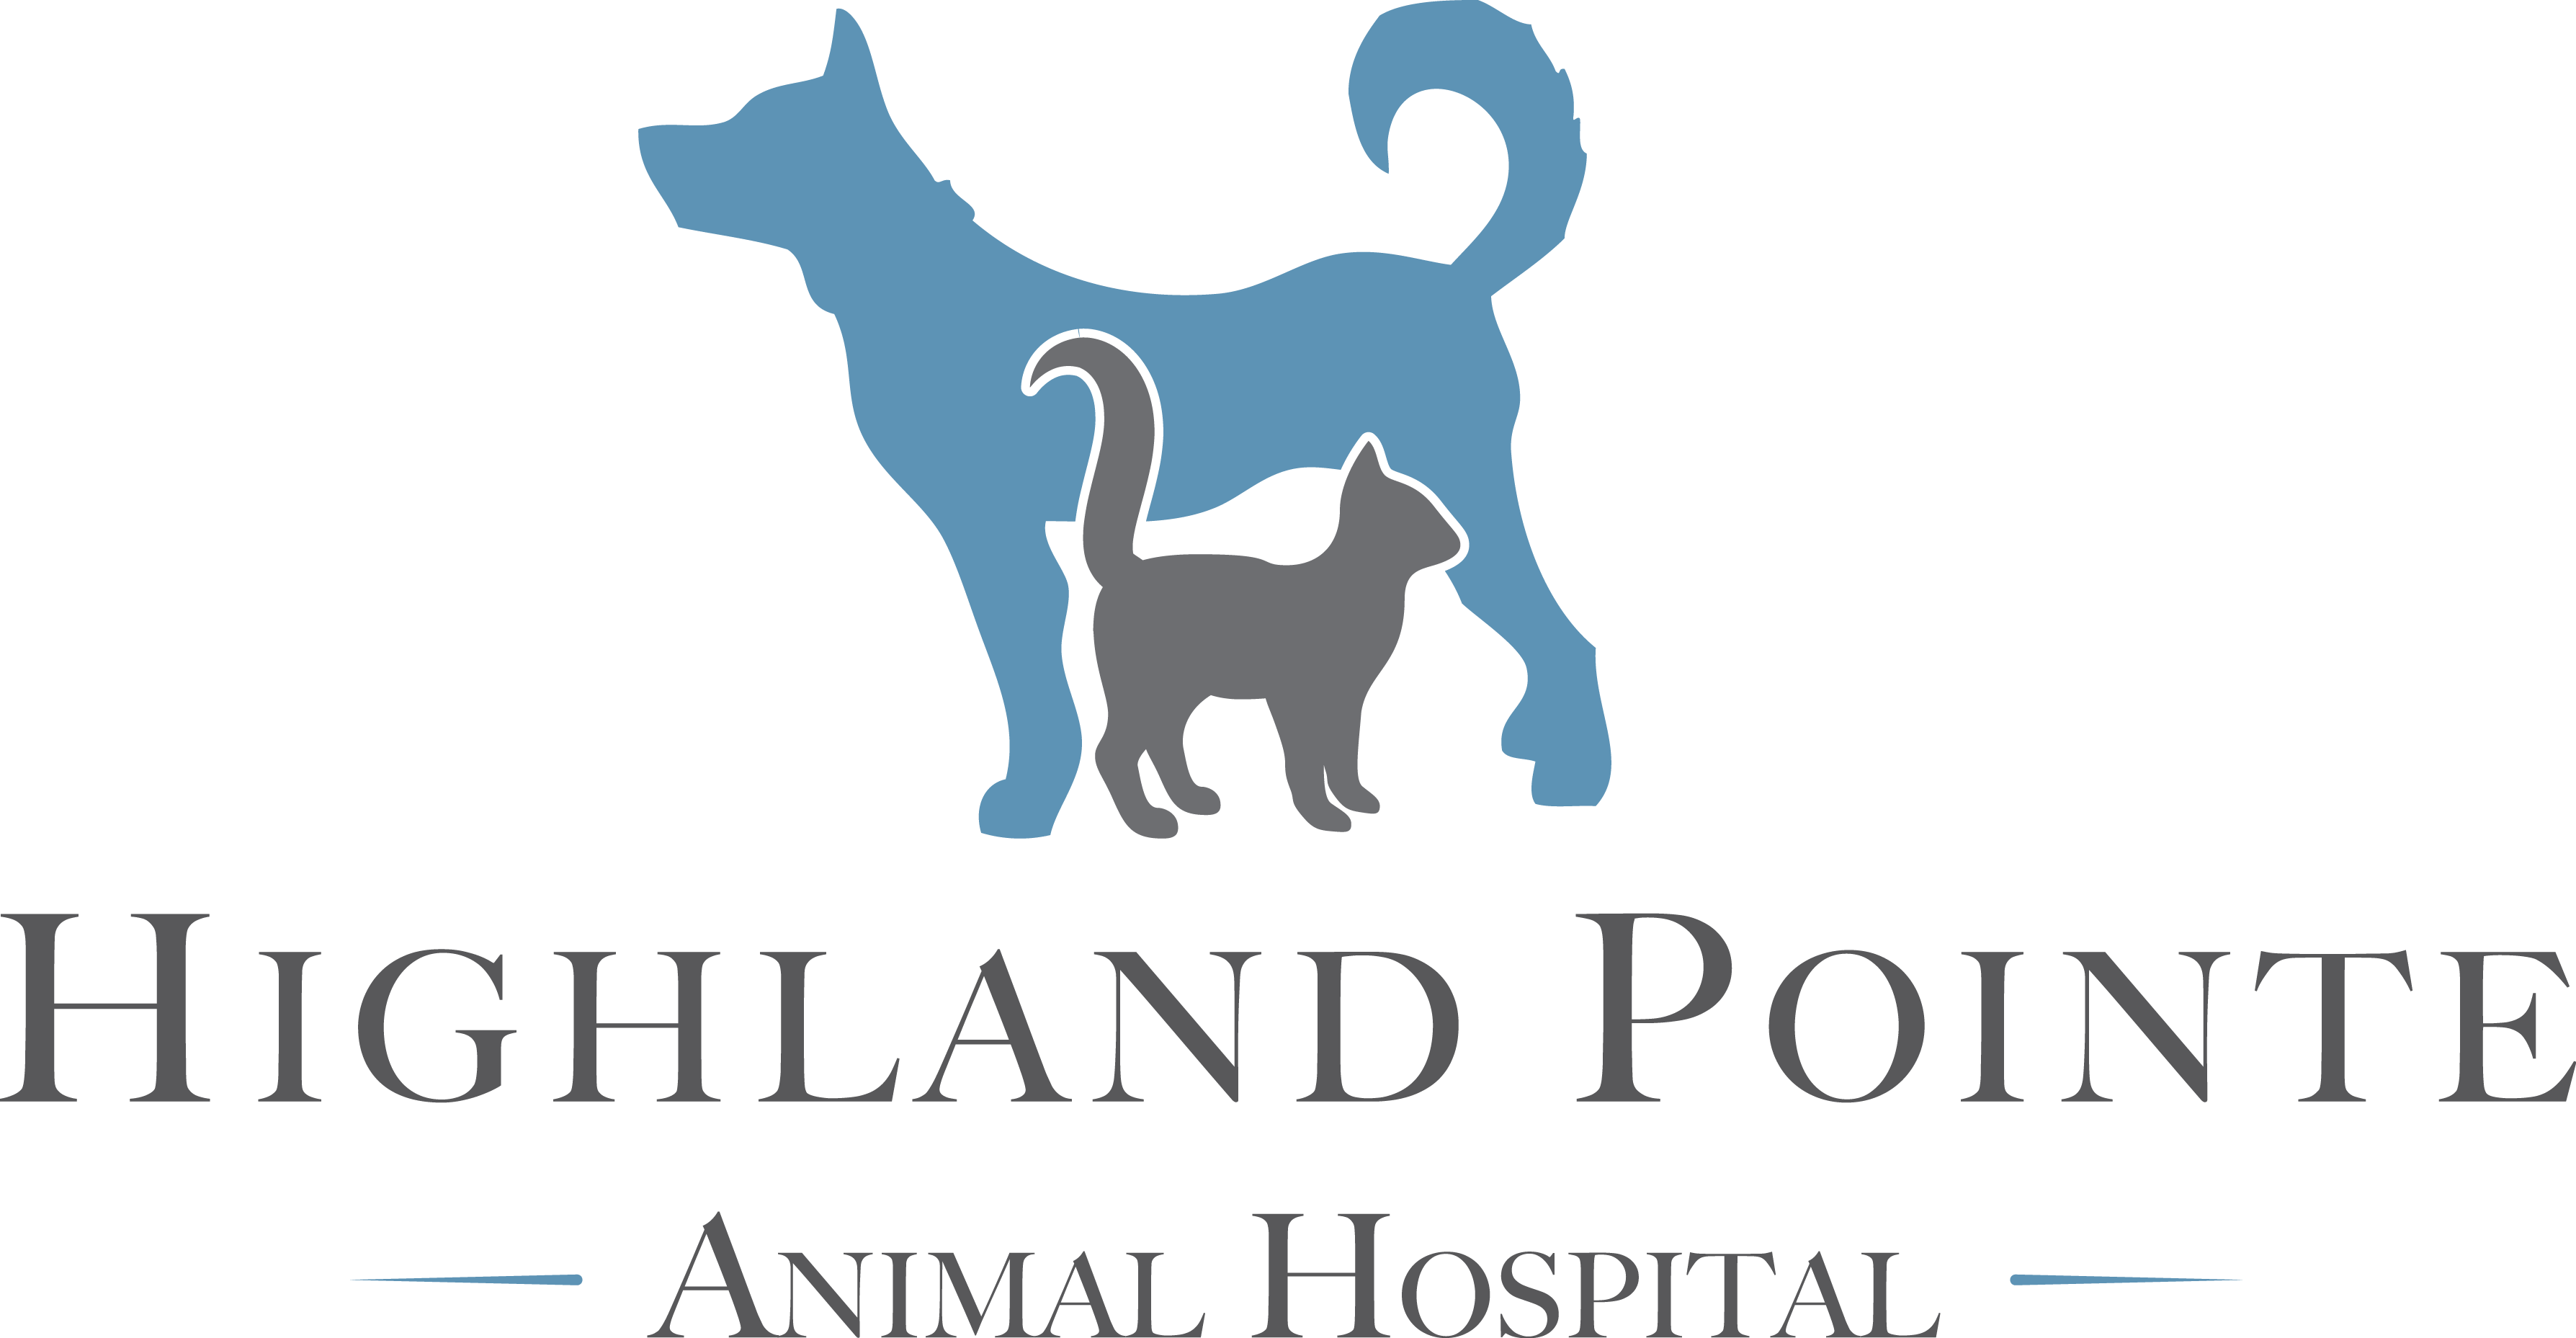 Highland Pointe Animal Hospital